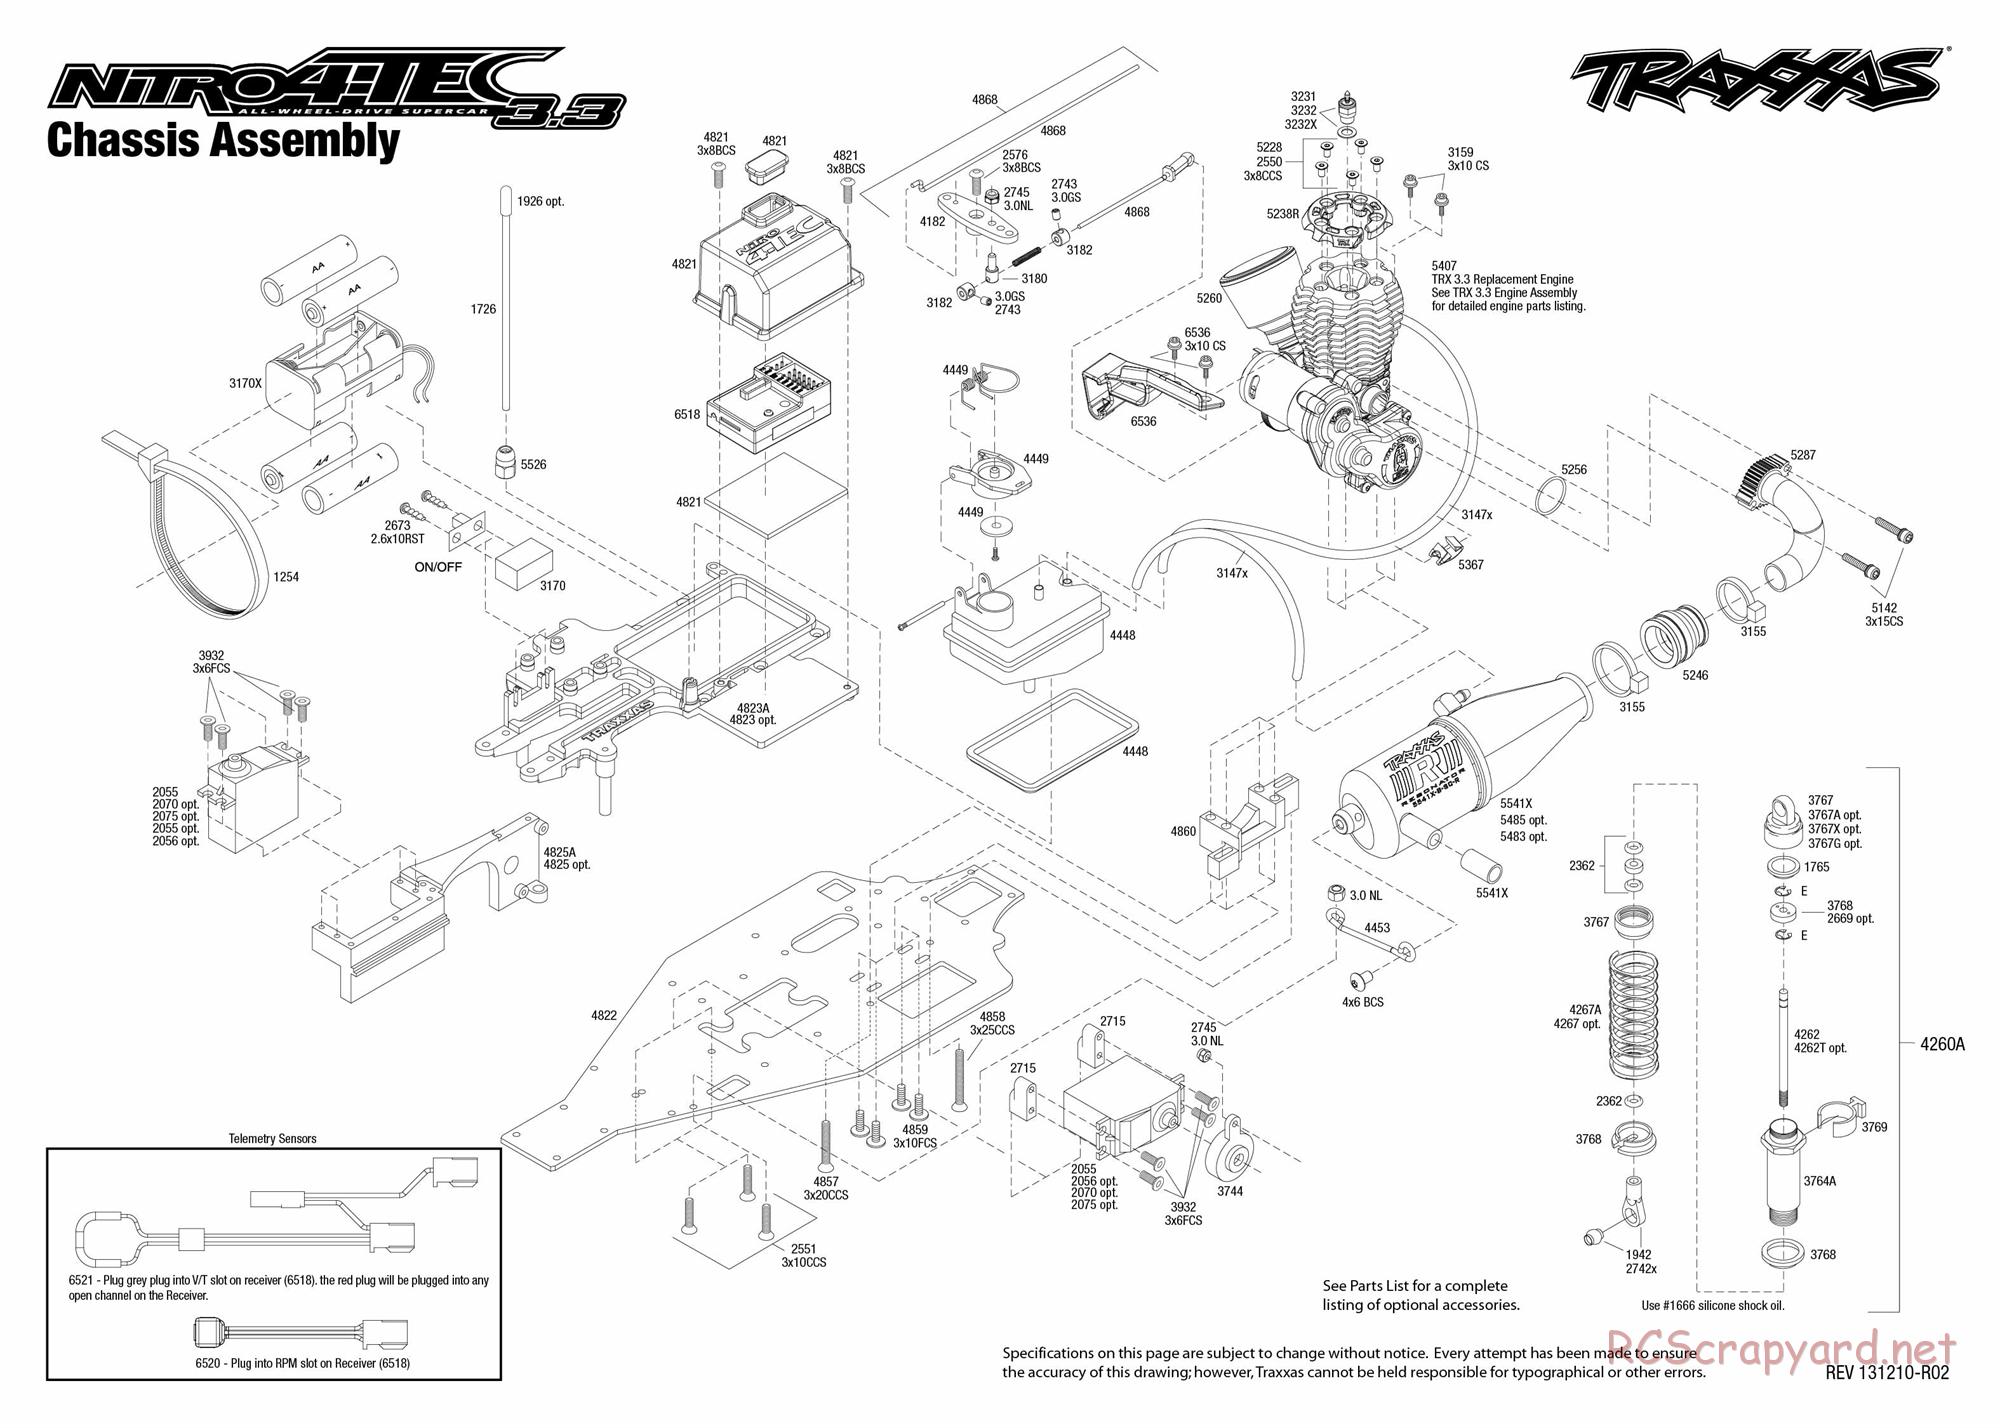 Traxxas - Nitro 4-Tec 3.3 (2010) - Exploded Views - Page 1